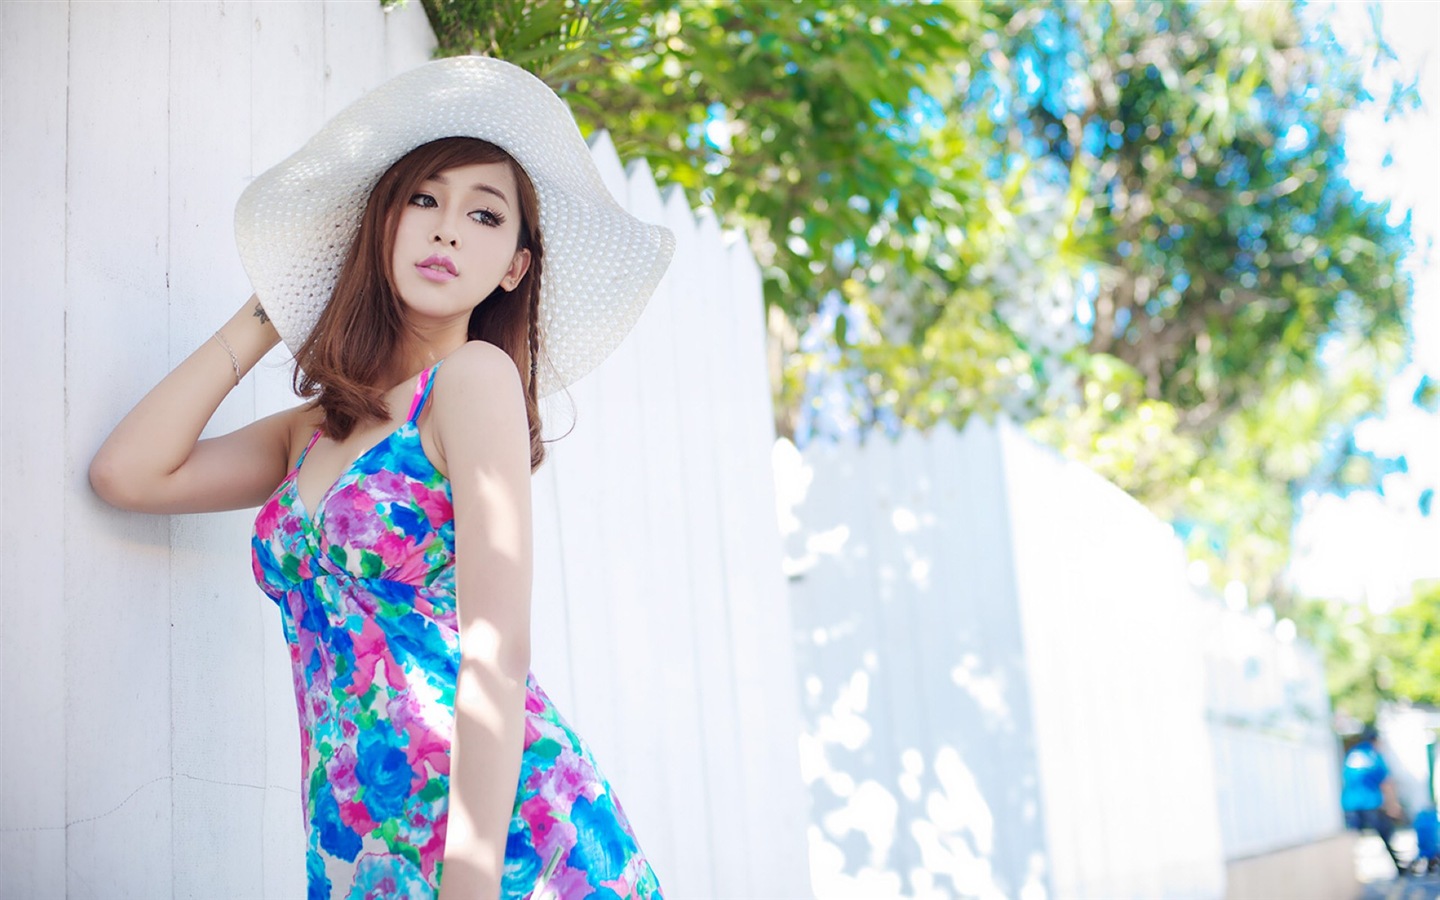 Pure seductive Oriental girls HD wallpapers #14 - 1440x900